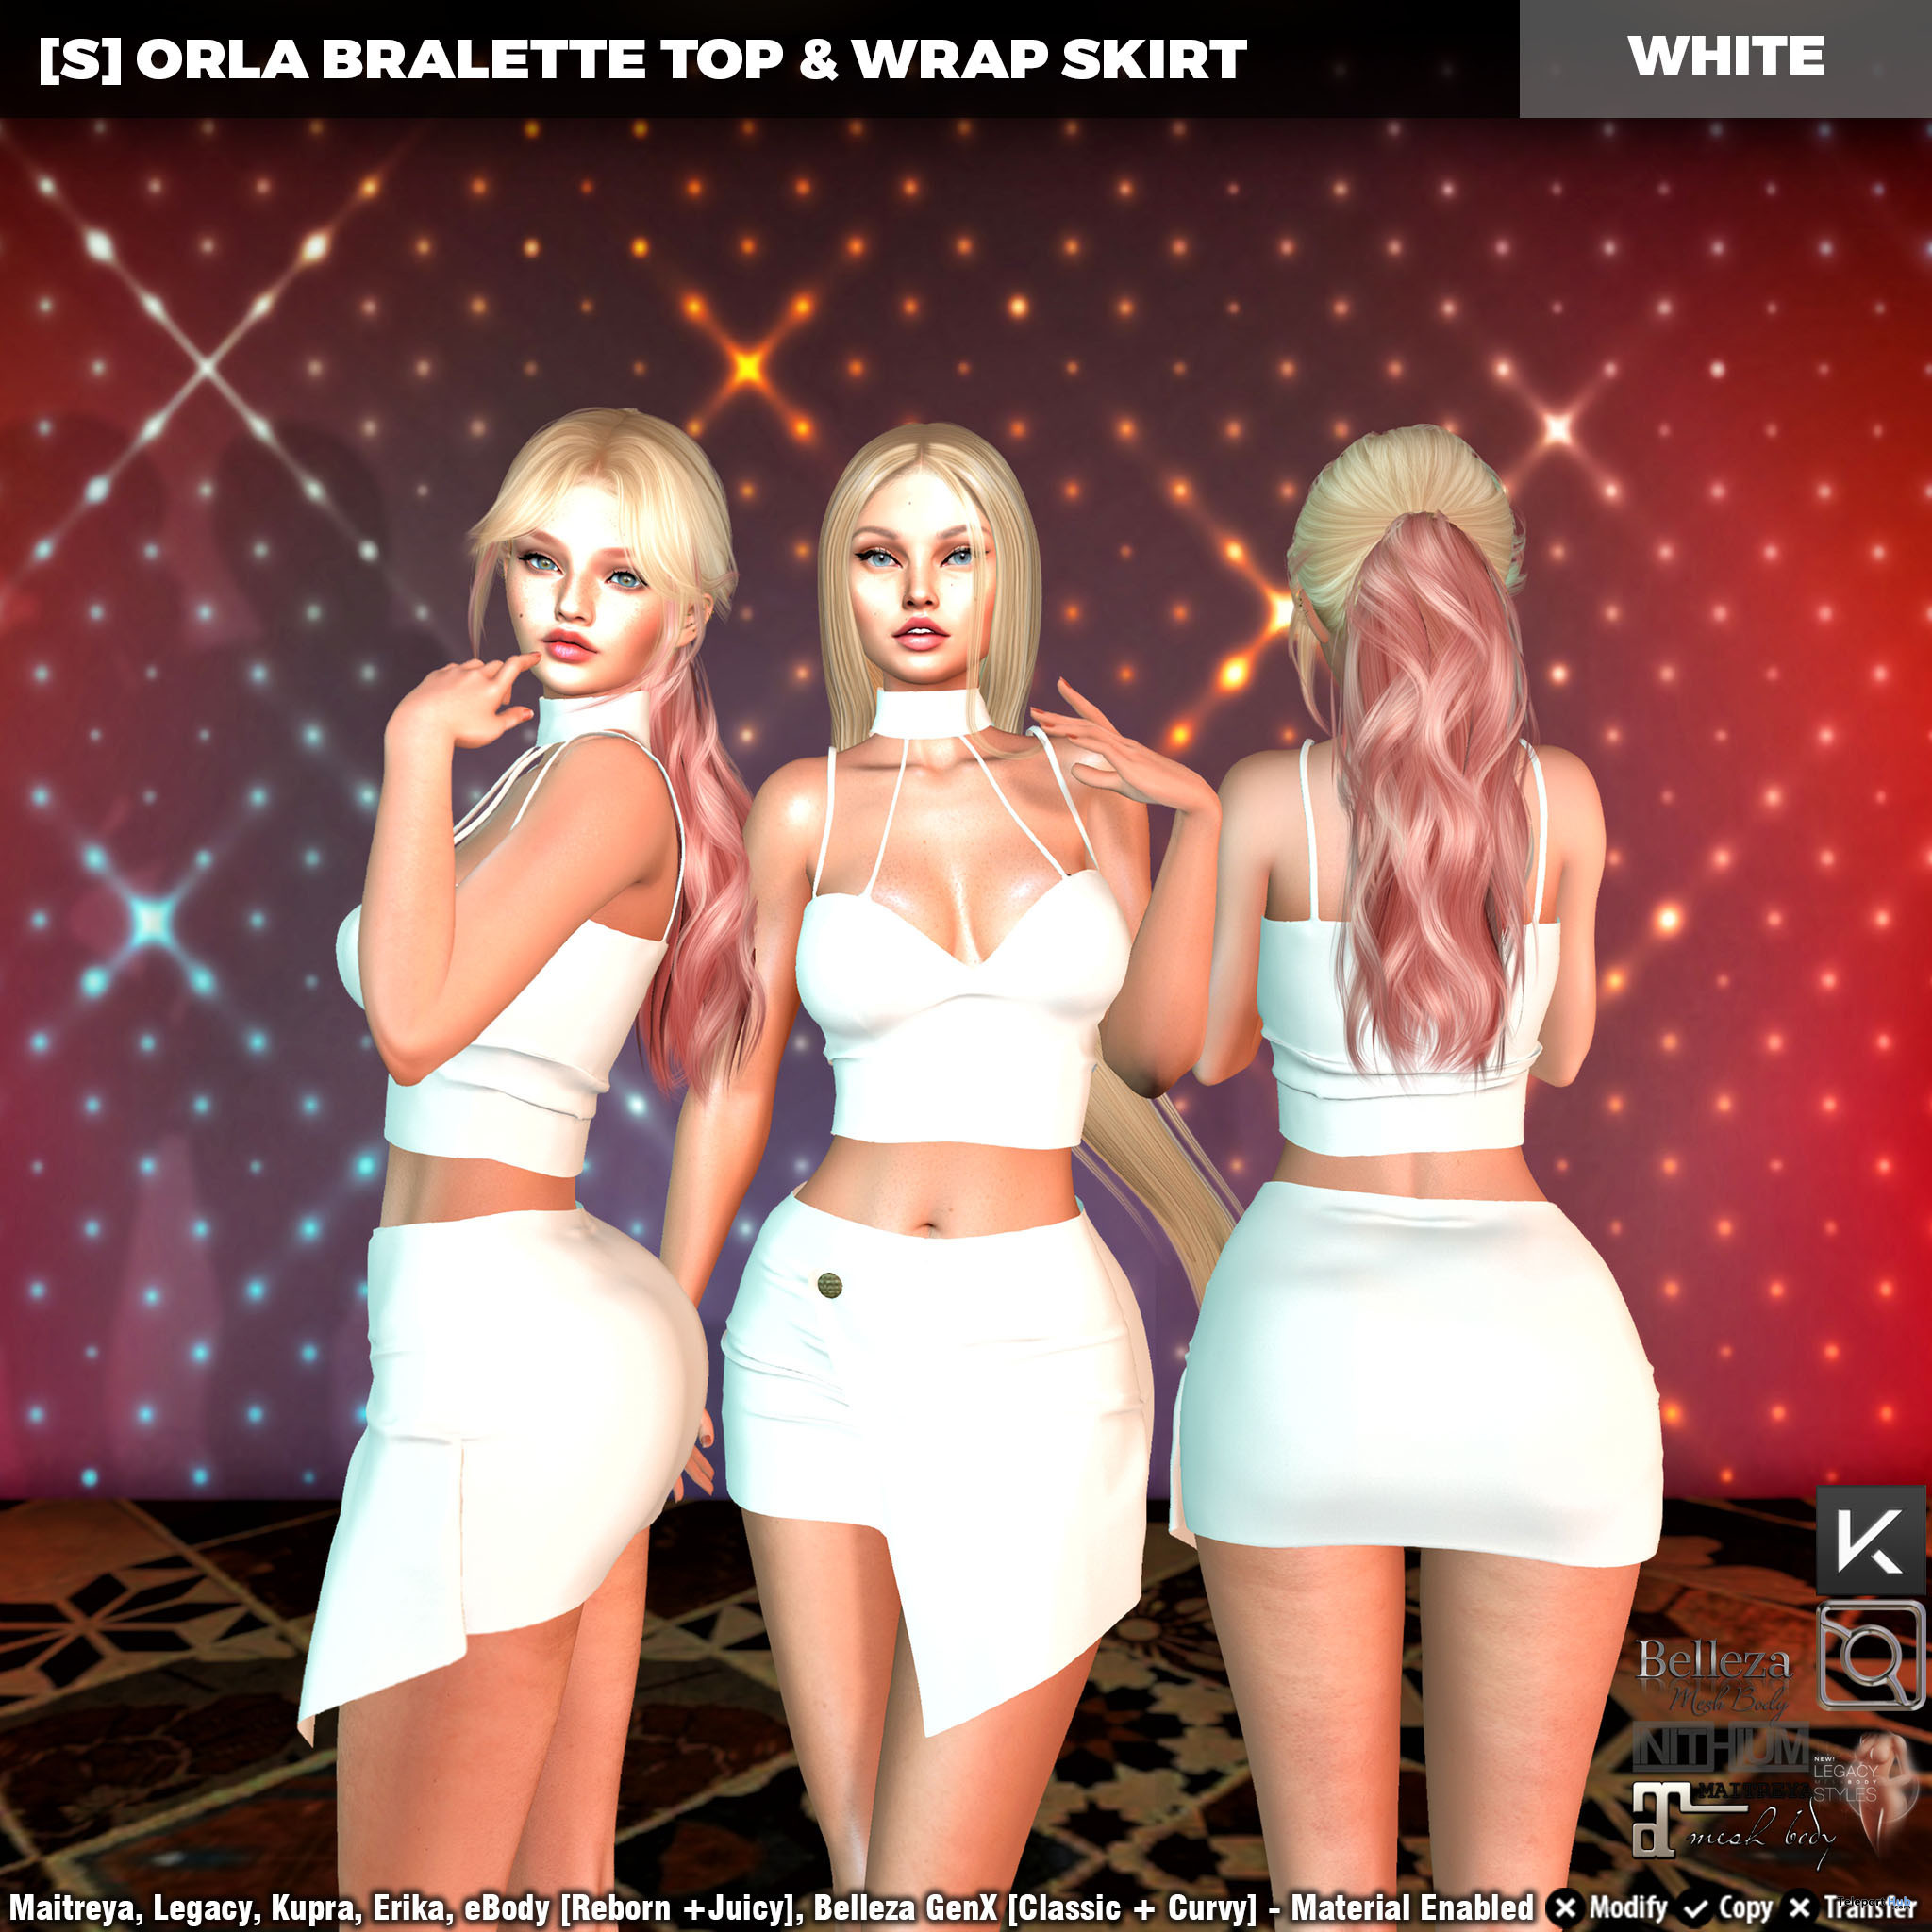 New Release: [S] Orla Bralette Top & Wrap Skirt by [satus Inc] - Teleport Hub - teleporthub.com